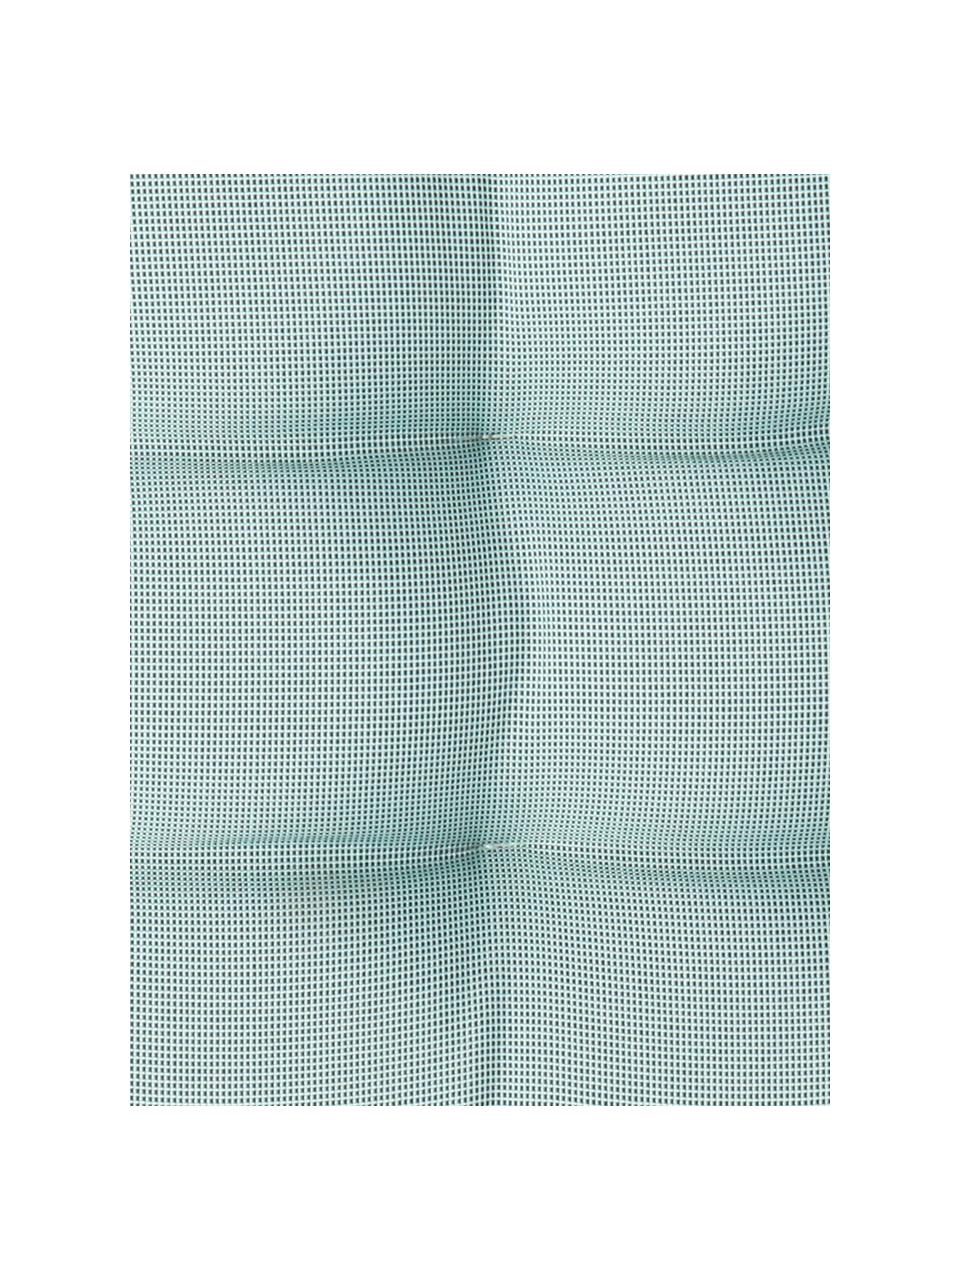 Zweifarbig gewebtes Outdoor-Sitzkissen St. Maxime, 100% Polyester, Mintgrün, B 38 x L 38 cm